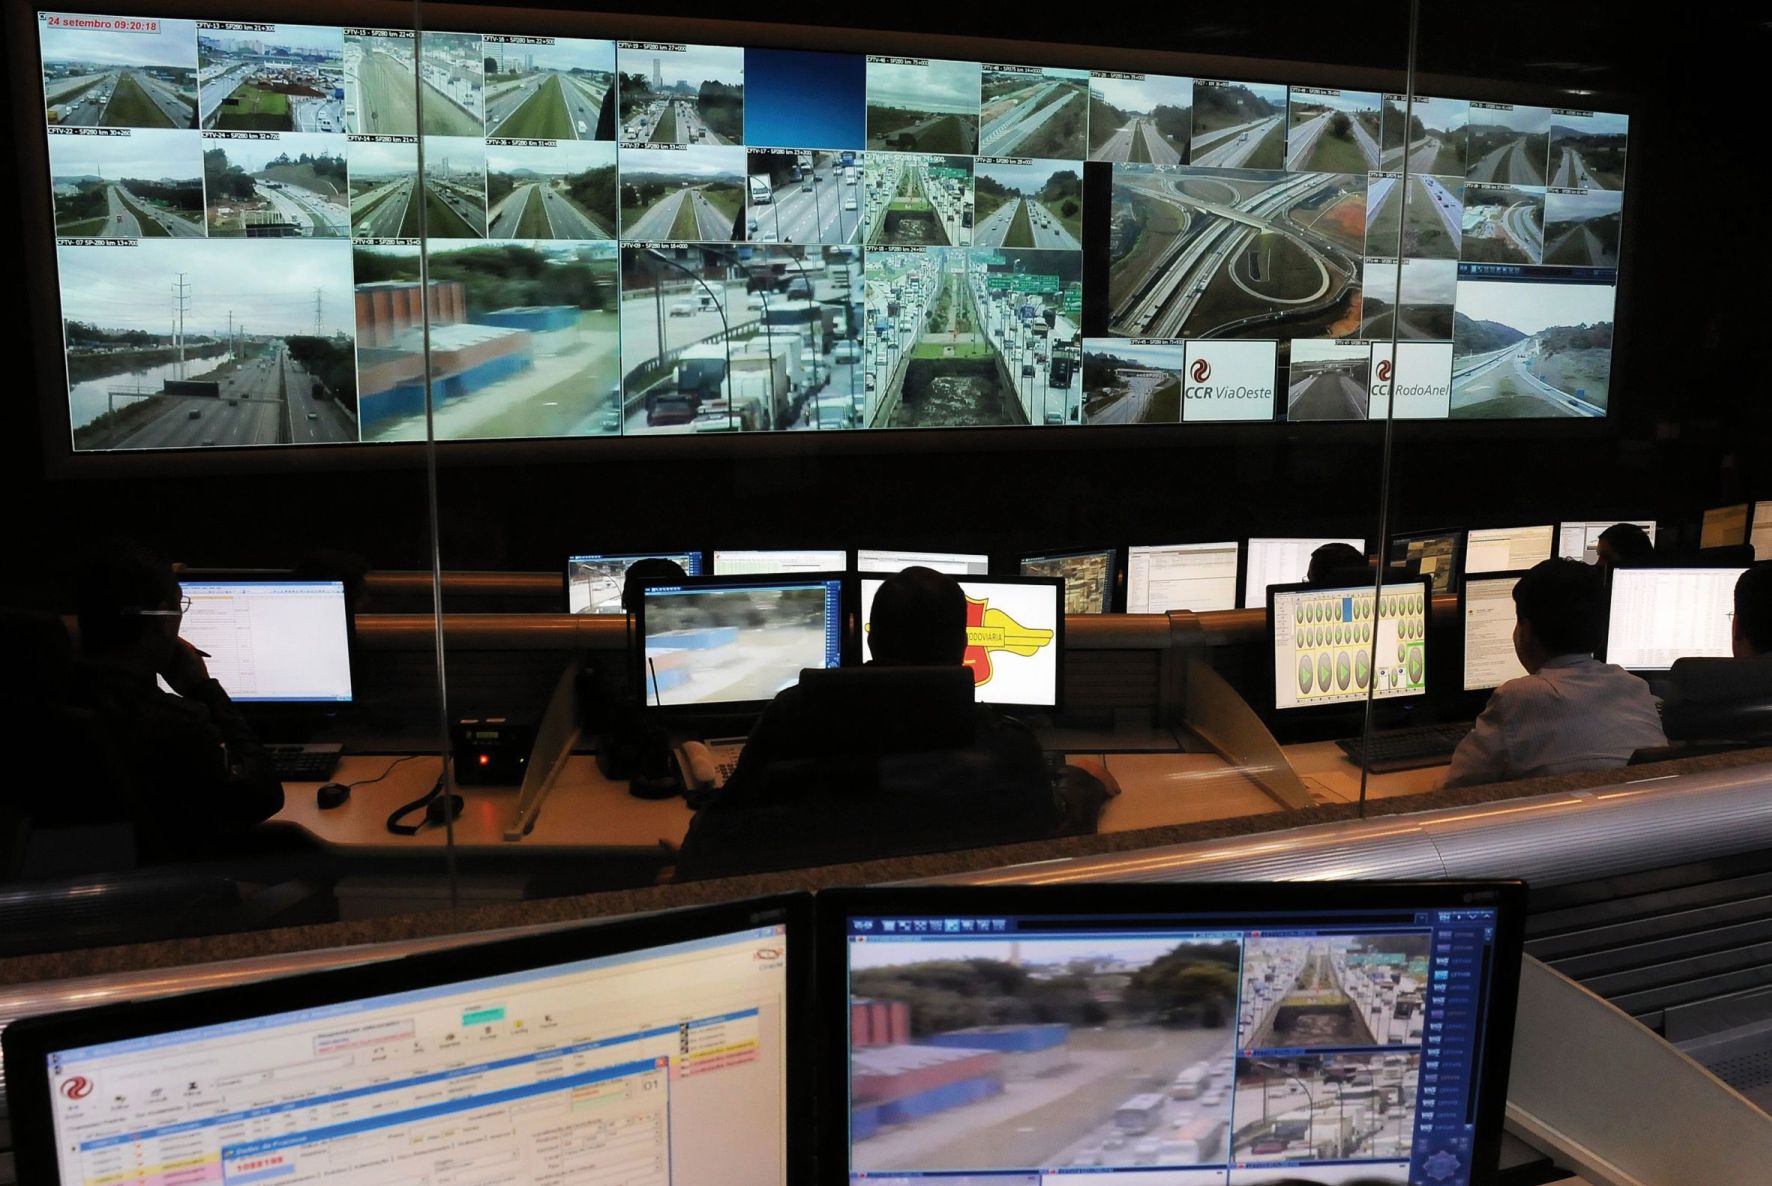 Camara-Axis-monitoreo-carretera